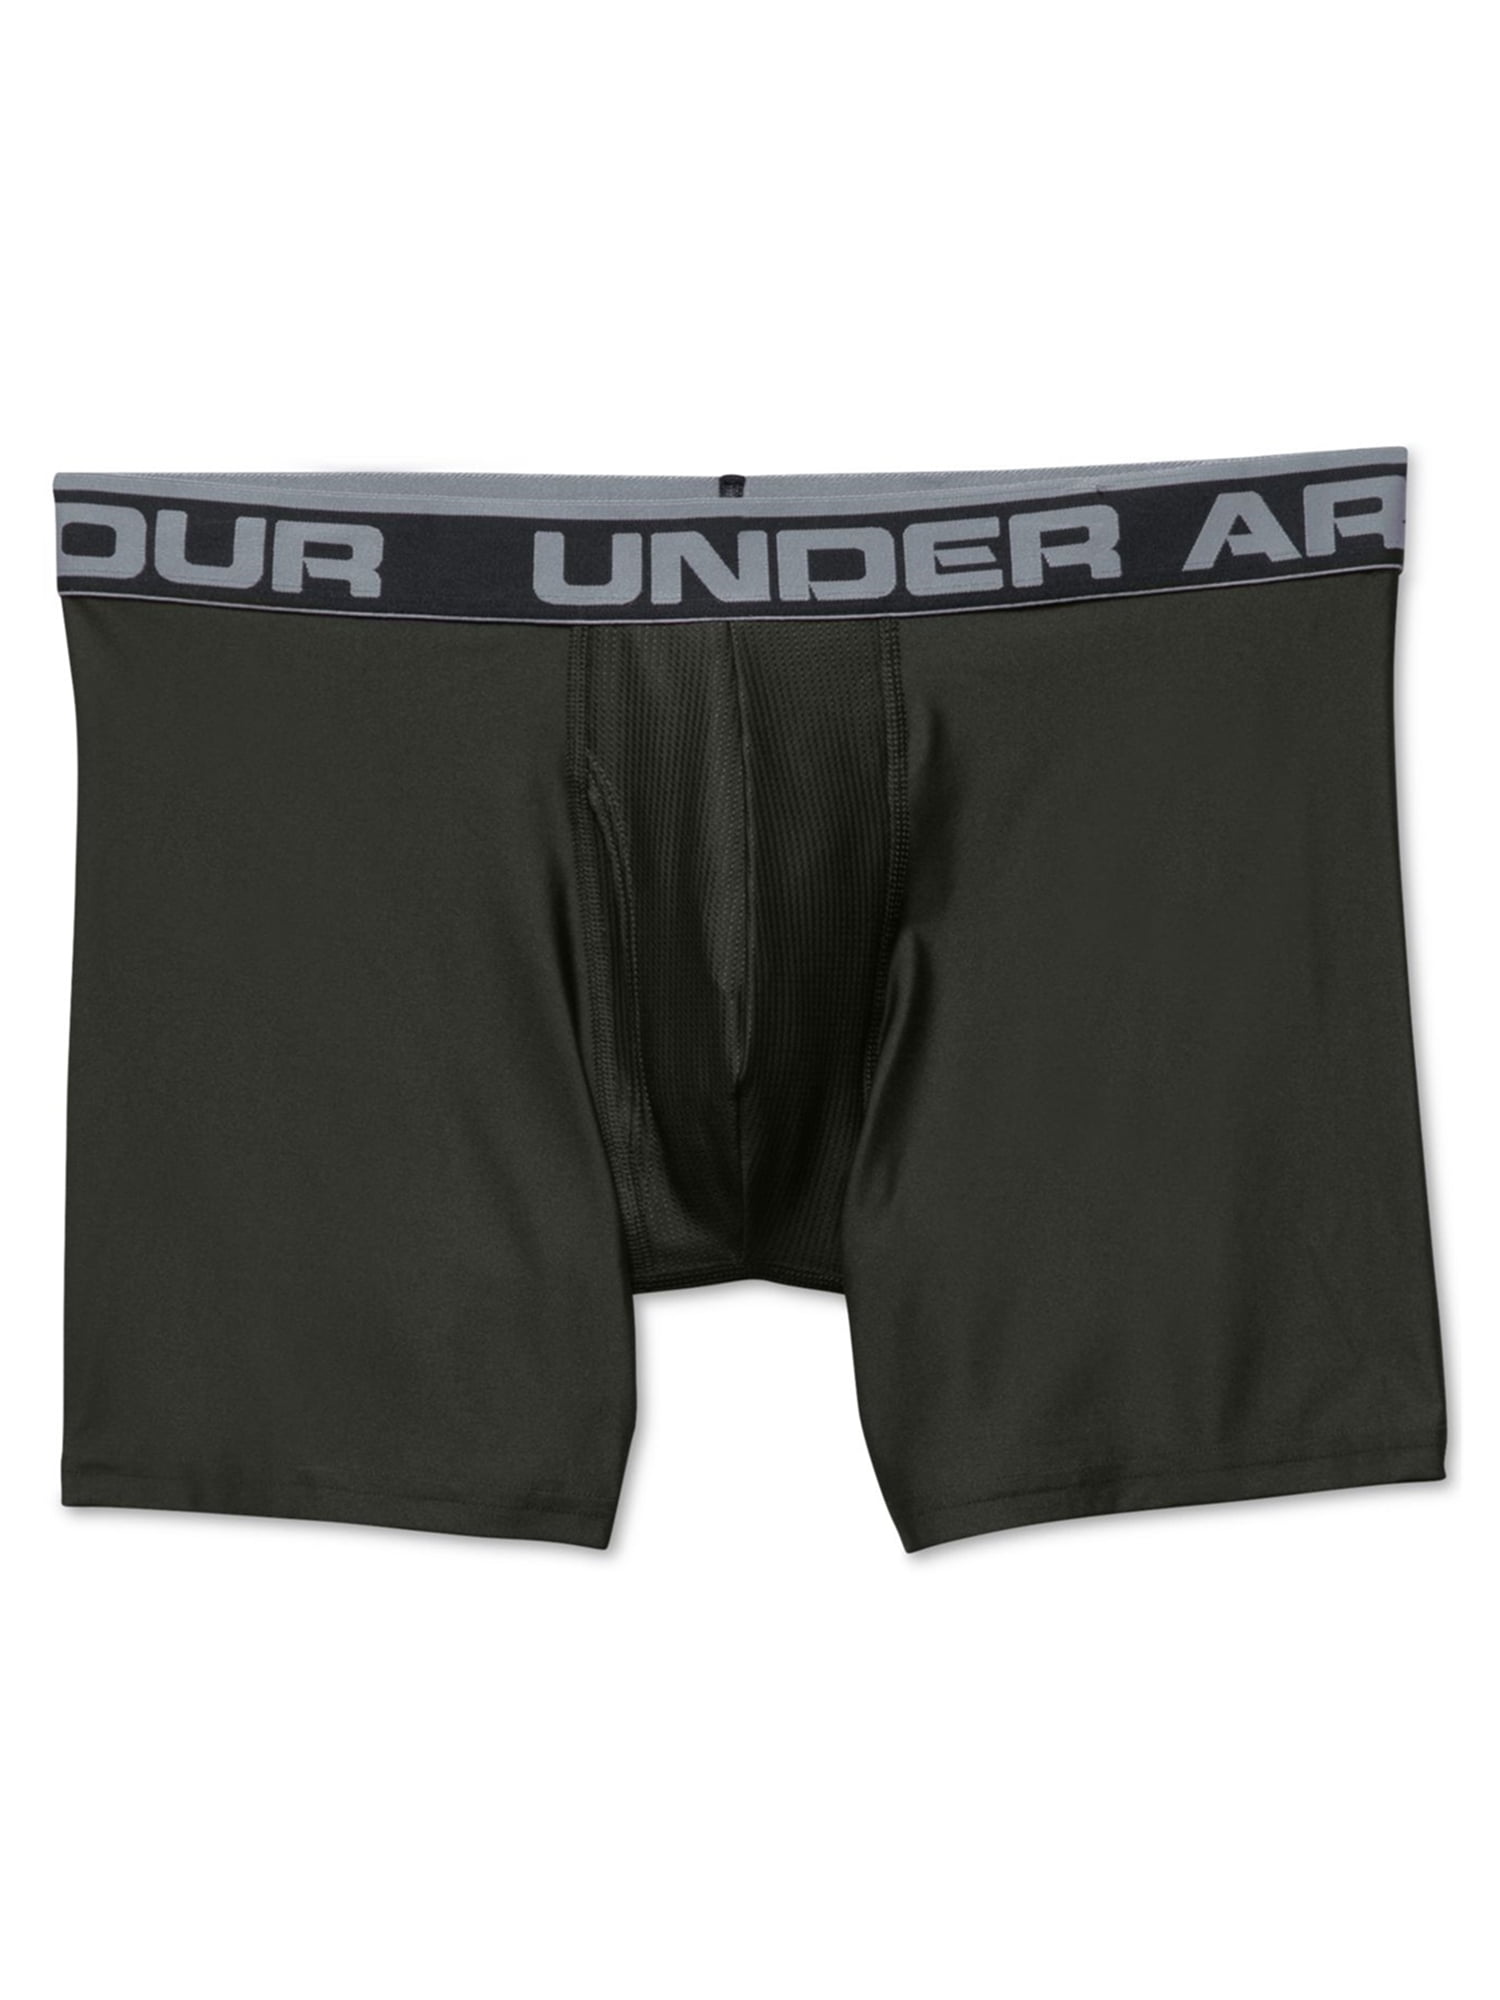 Under Armour Mens UA Original Underwear Boxer Briefs - Walmart.com